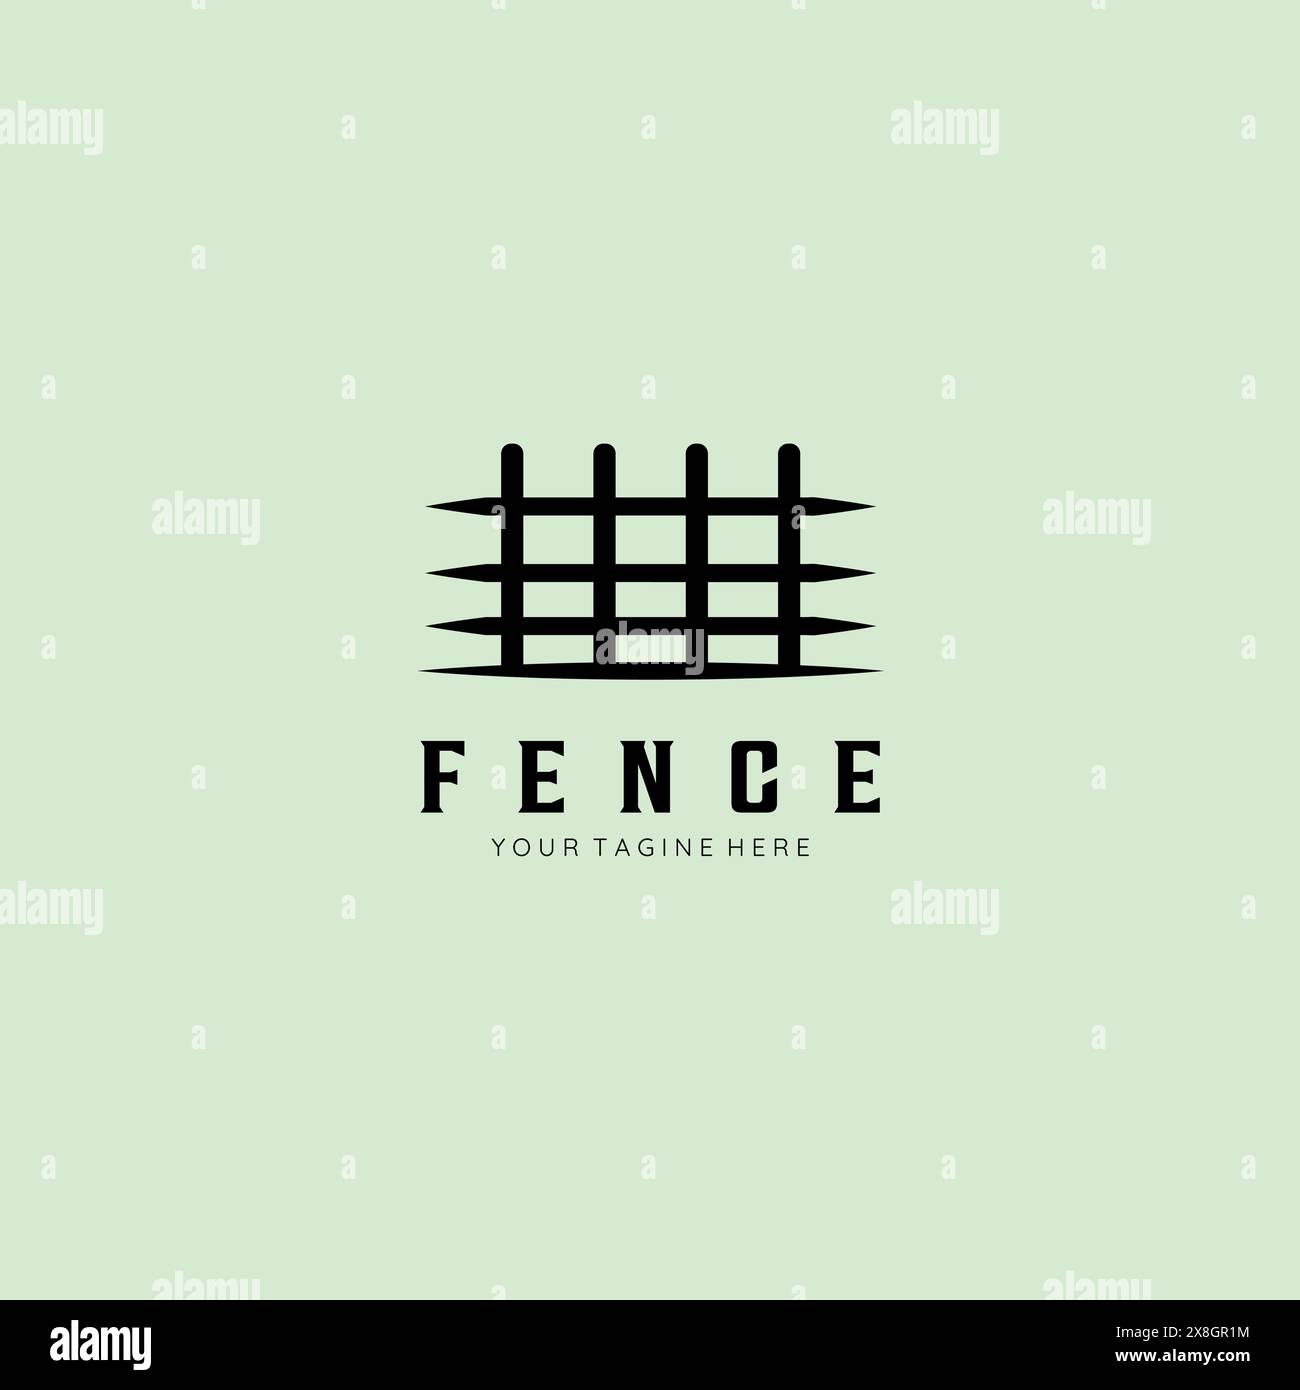 Fence logo vector illustration design Stock Vector